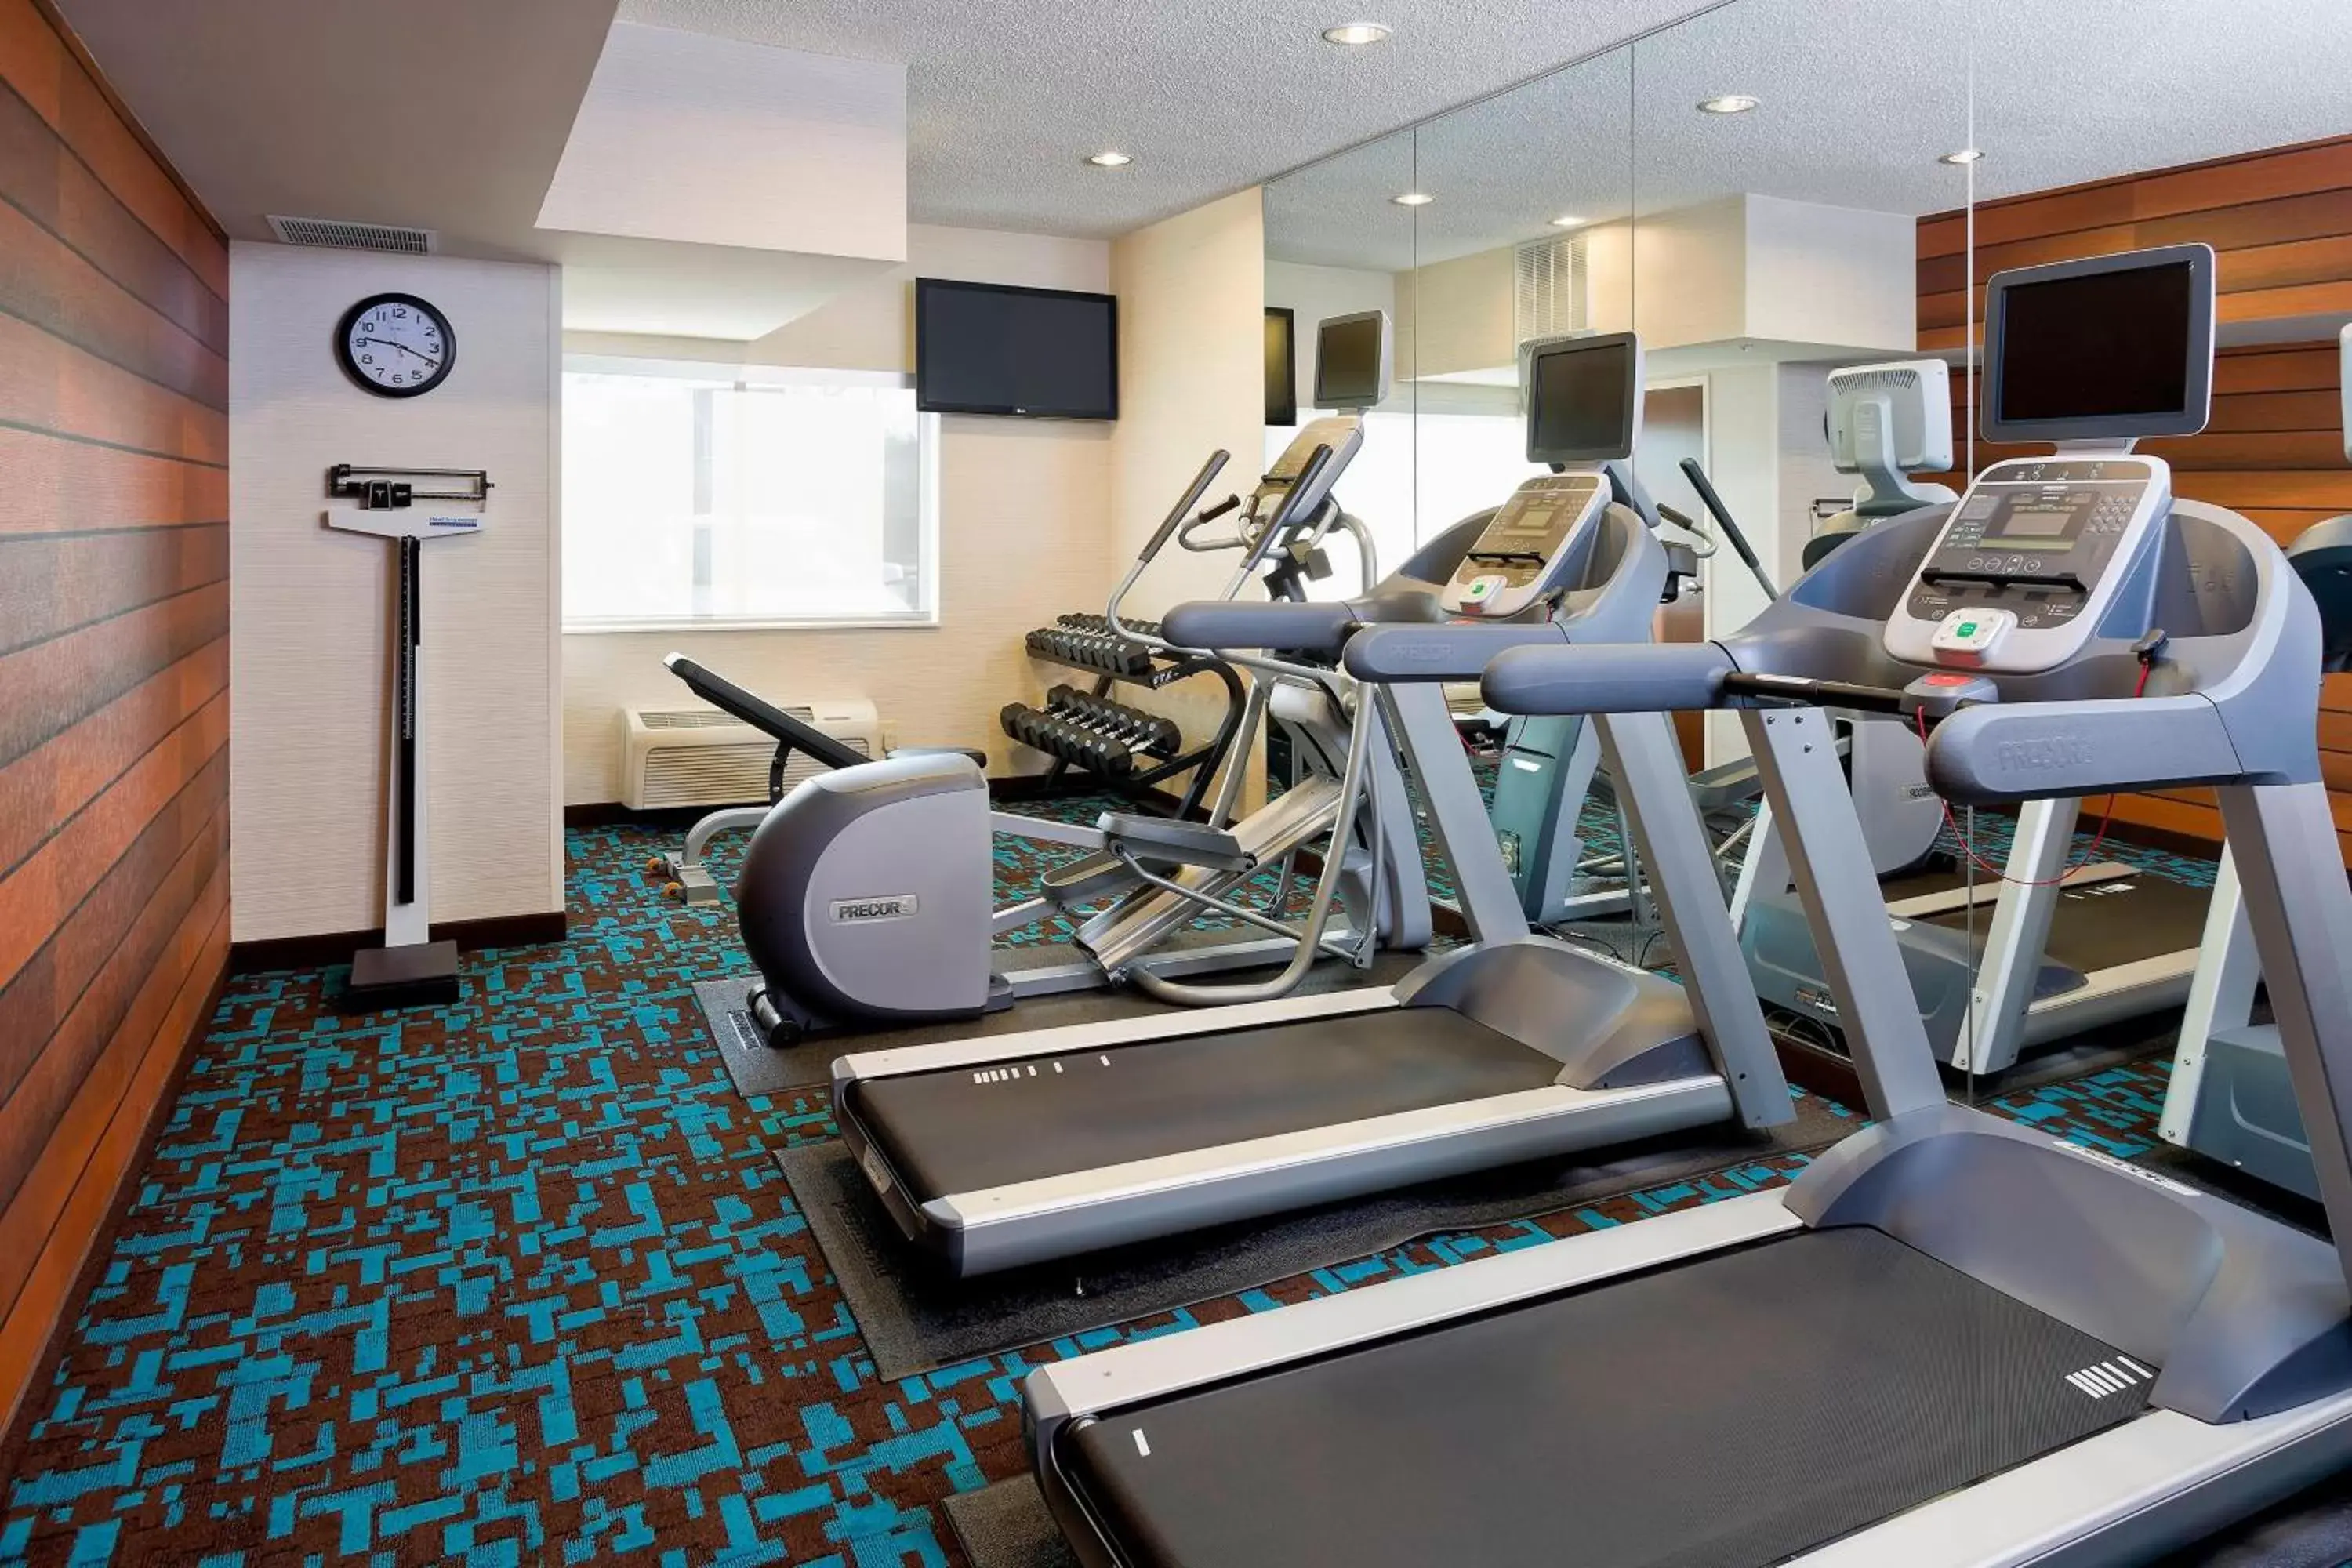 Fitness centre/facilities, Fitness Center/Facilities in Fairfield Inn & Suites Lexington Keeneland Airport